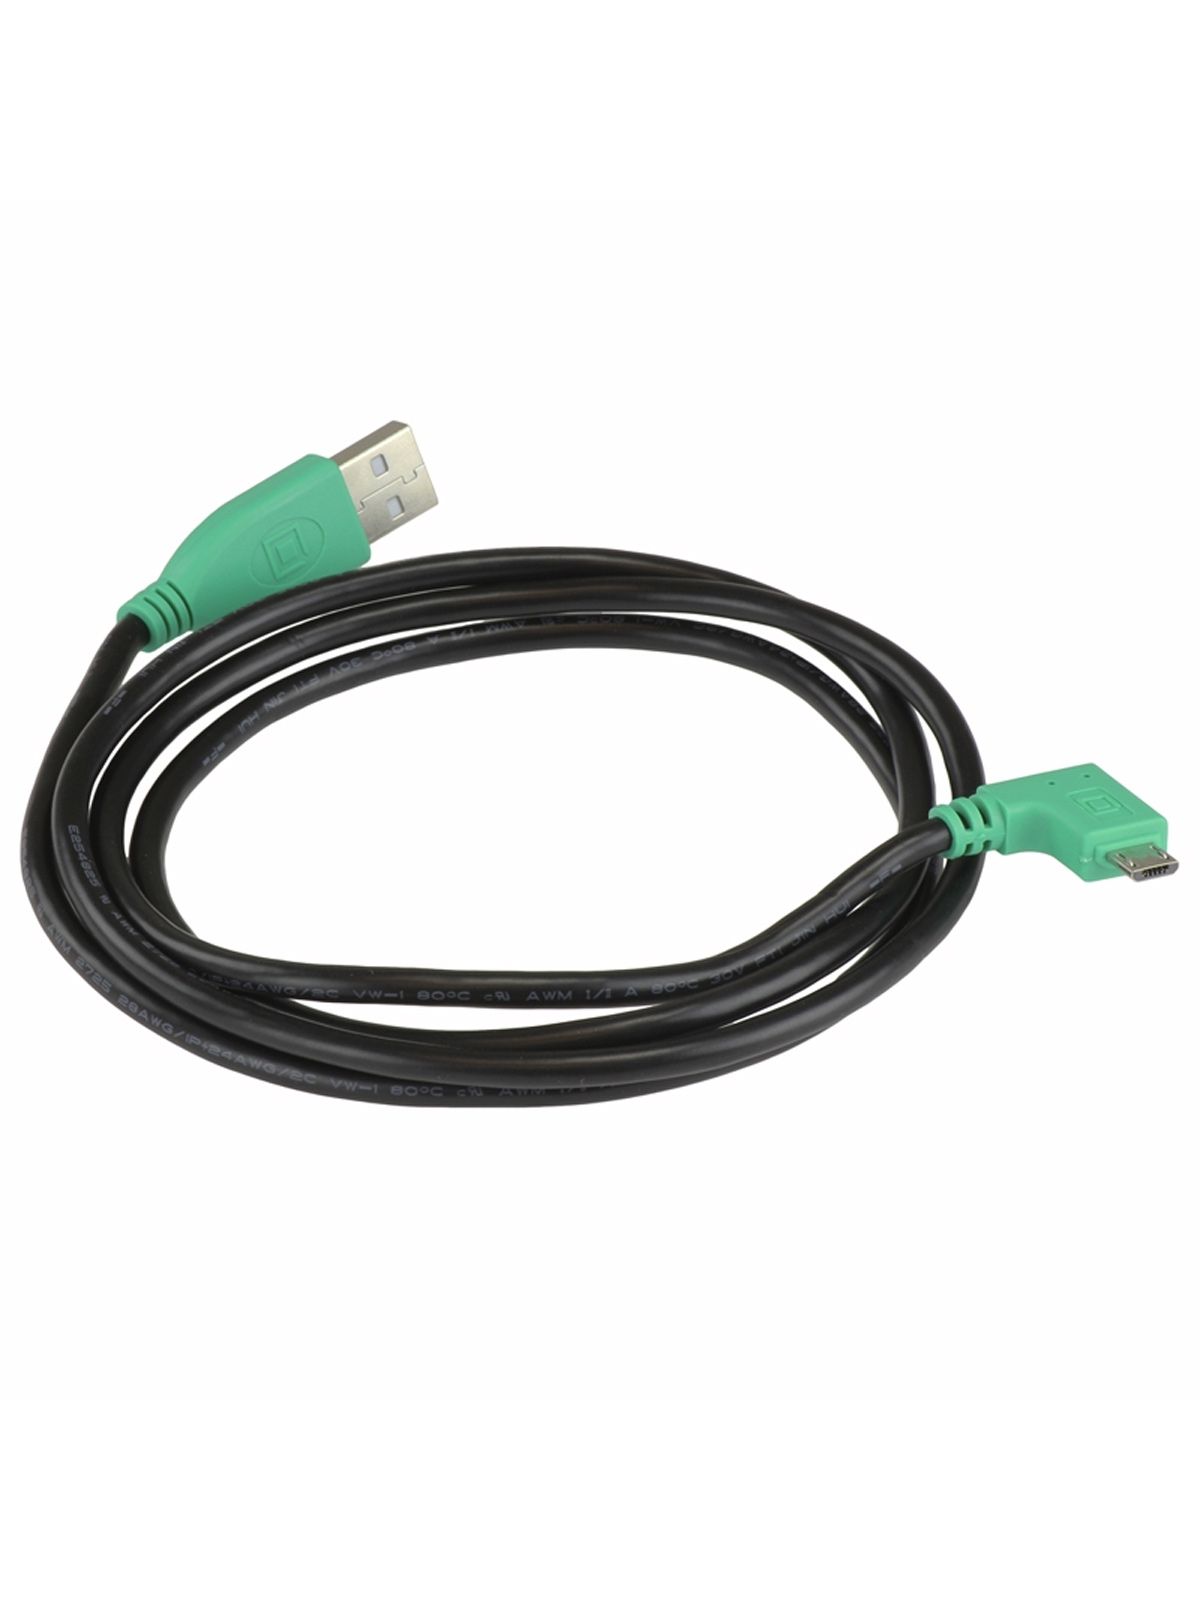 RAM Mounts GDS USB-Kabel - USB-A / 90° microUSB (2.0), ca. 120 cm lang